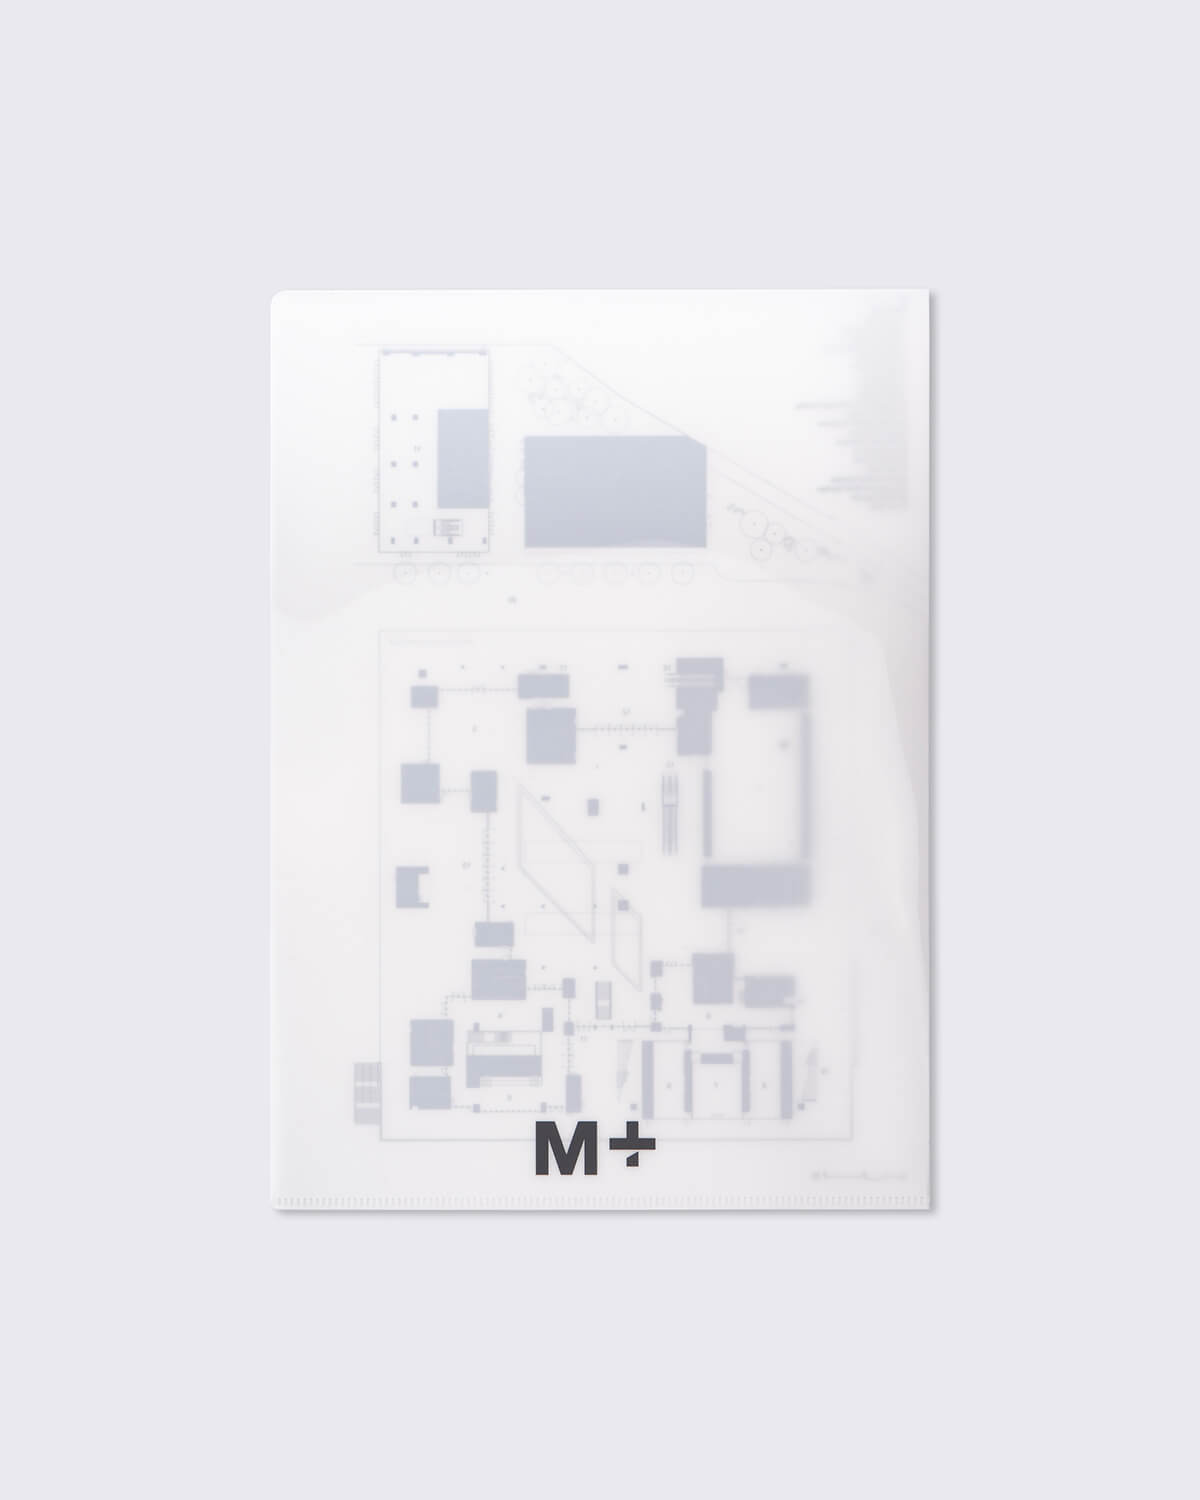 M+ Building Ground Floor Plan Folder